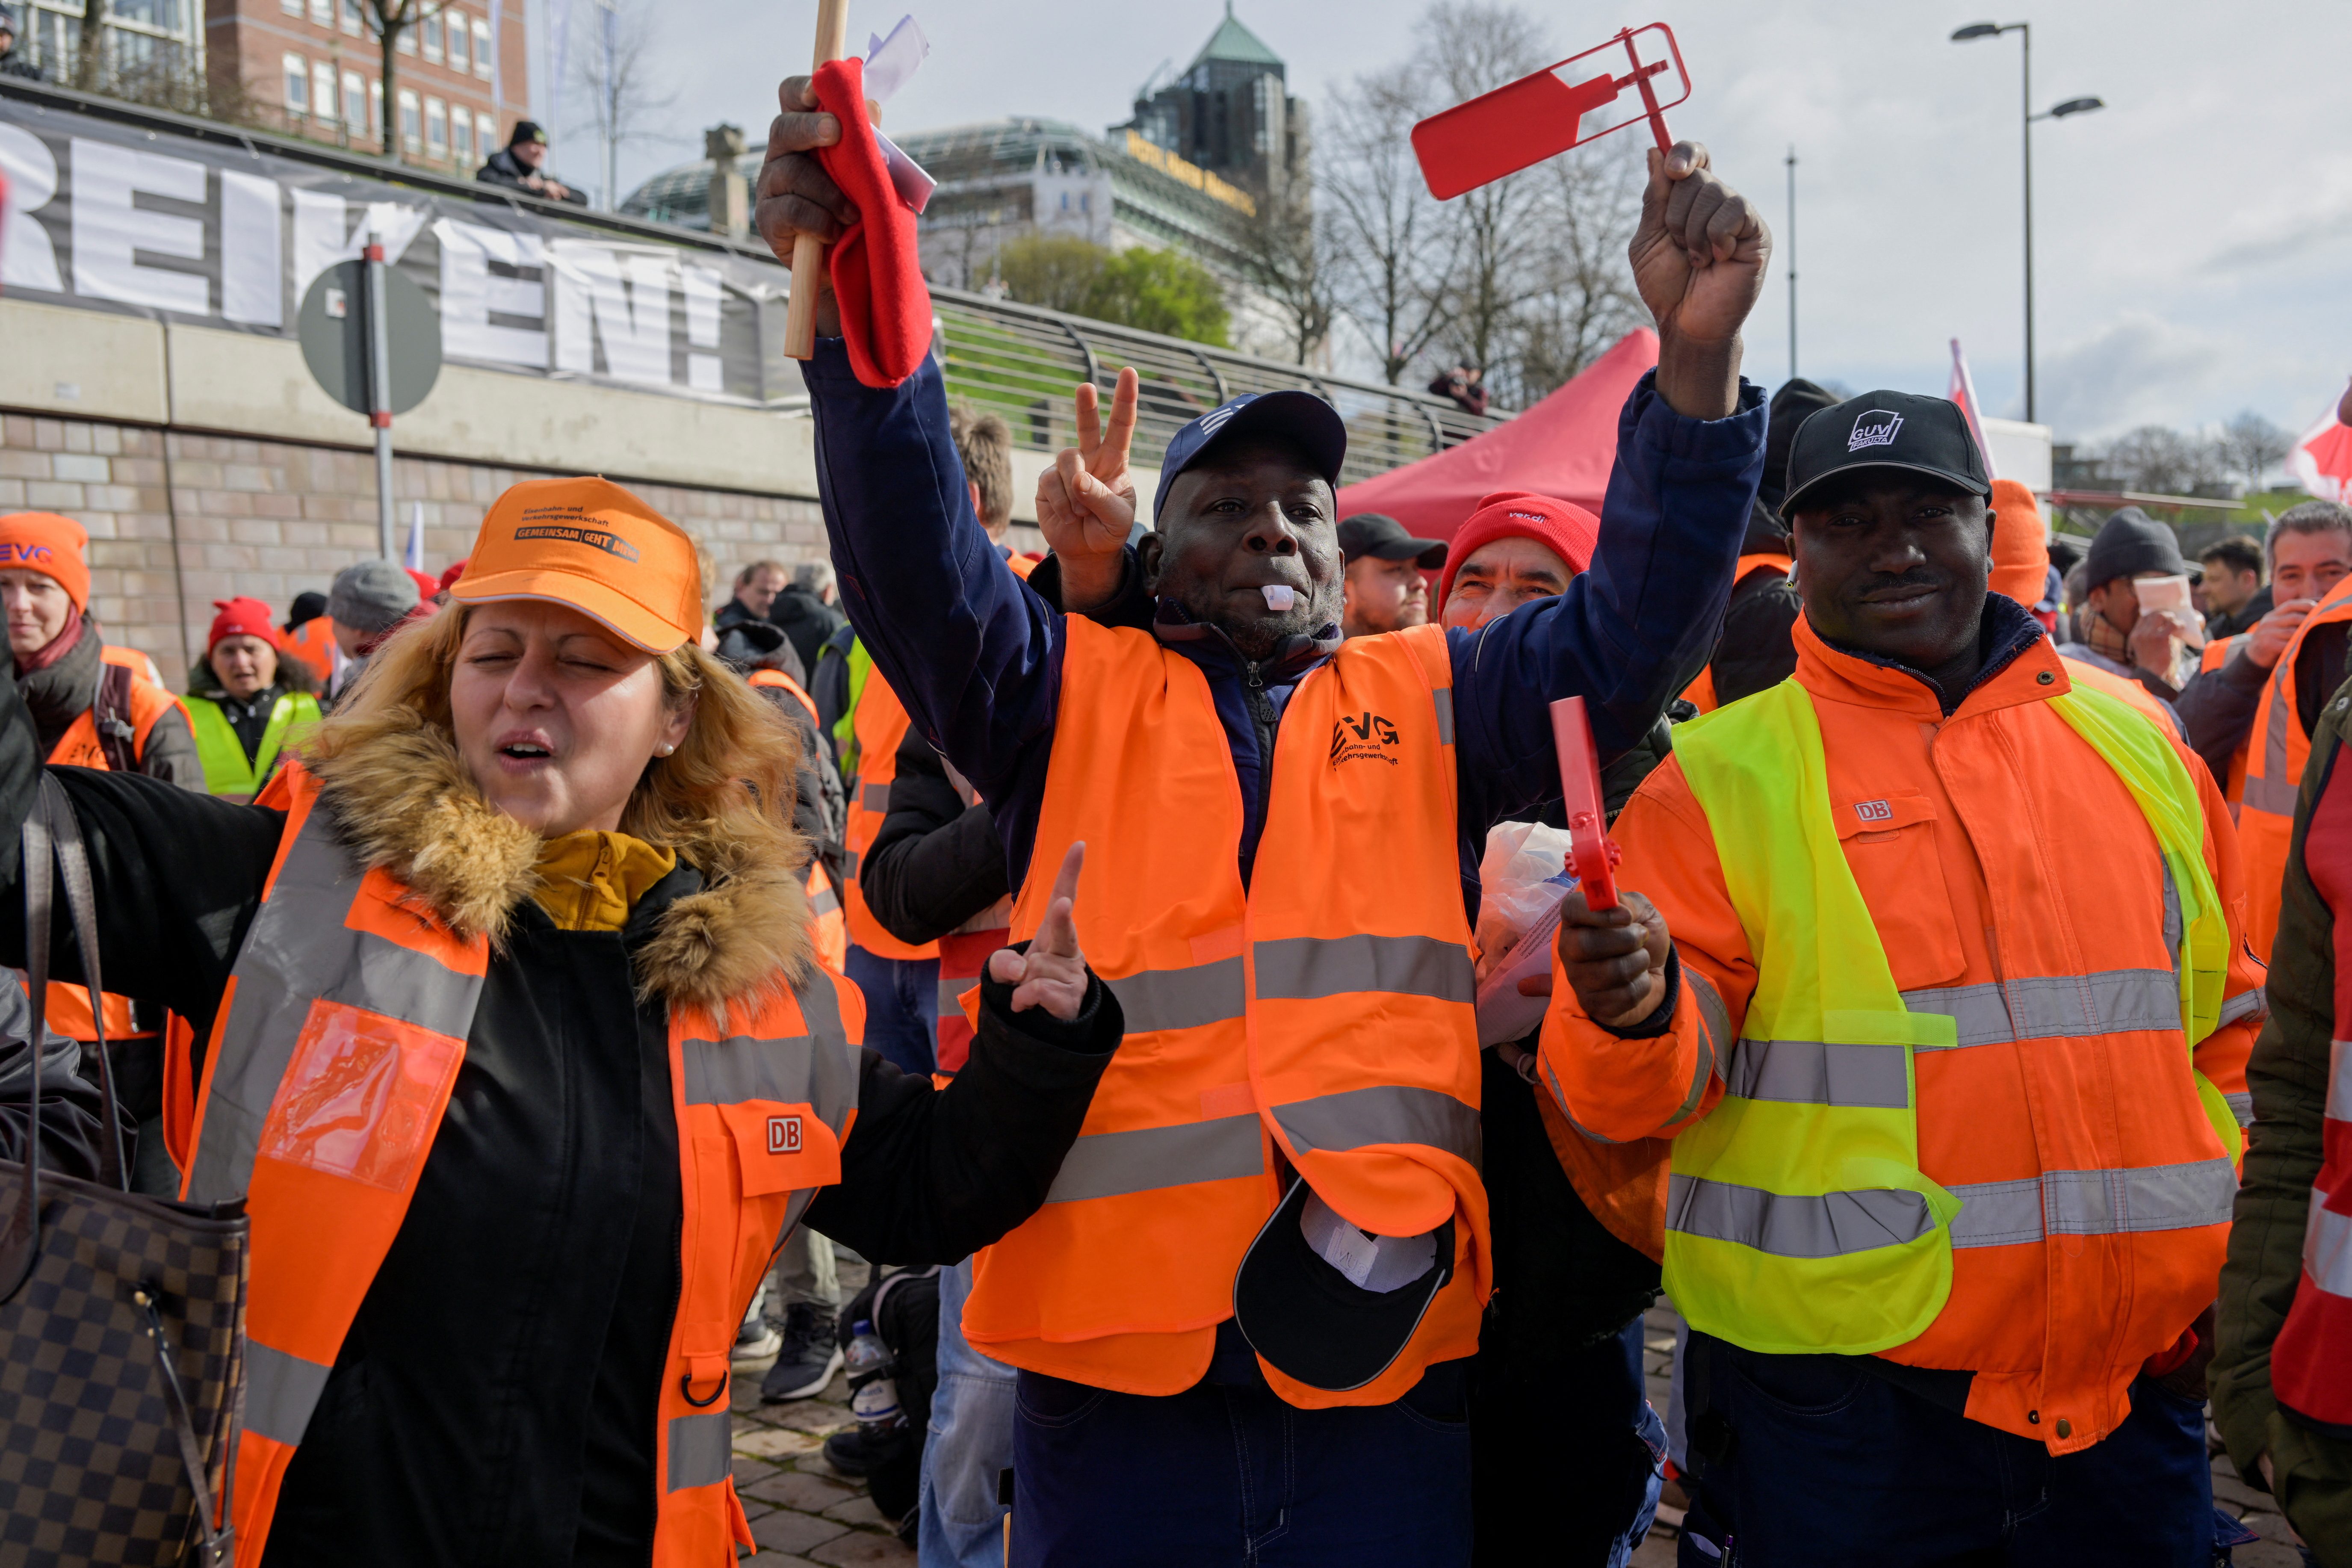 Verdi calls nationwide strike over wage dispute in Germany